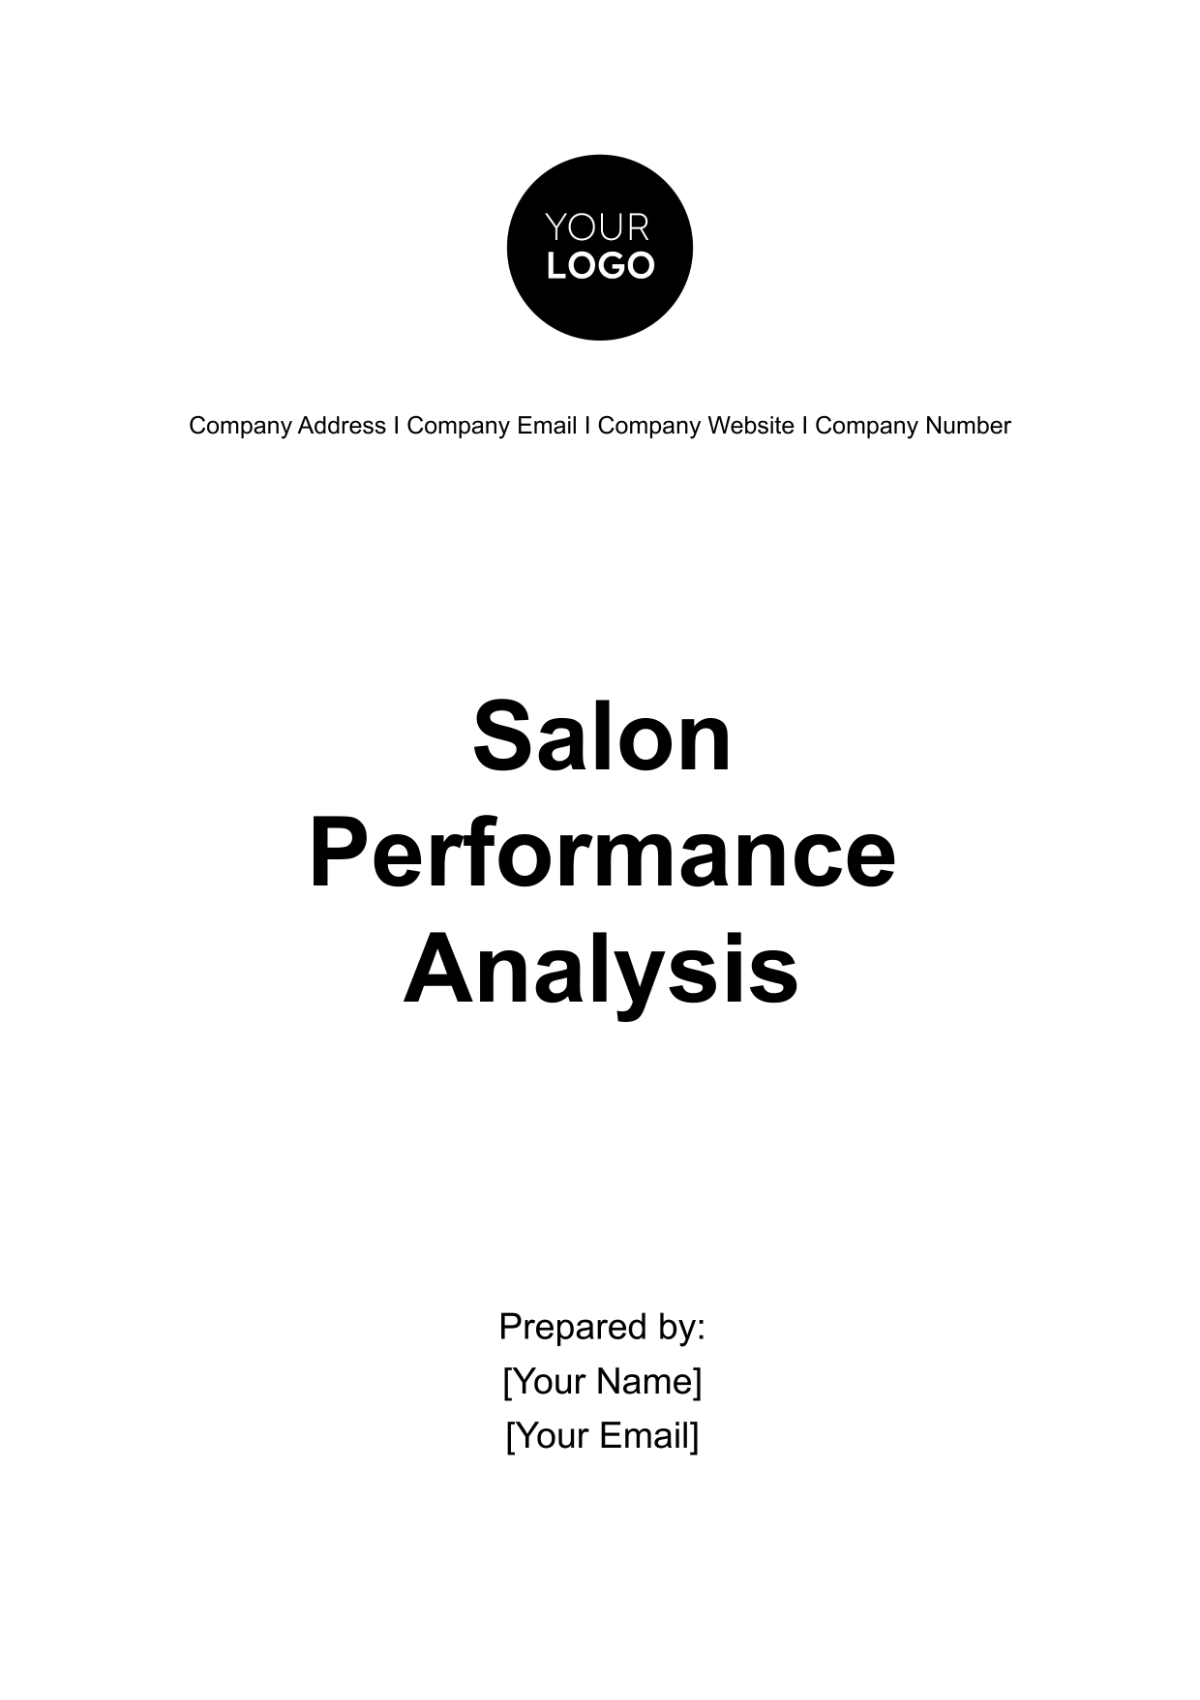 Salon Performance Analysis Template